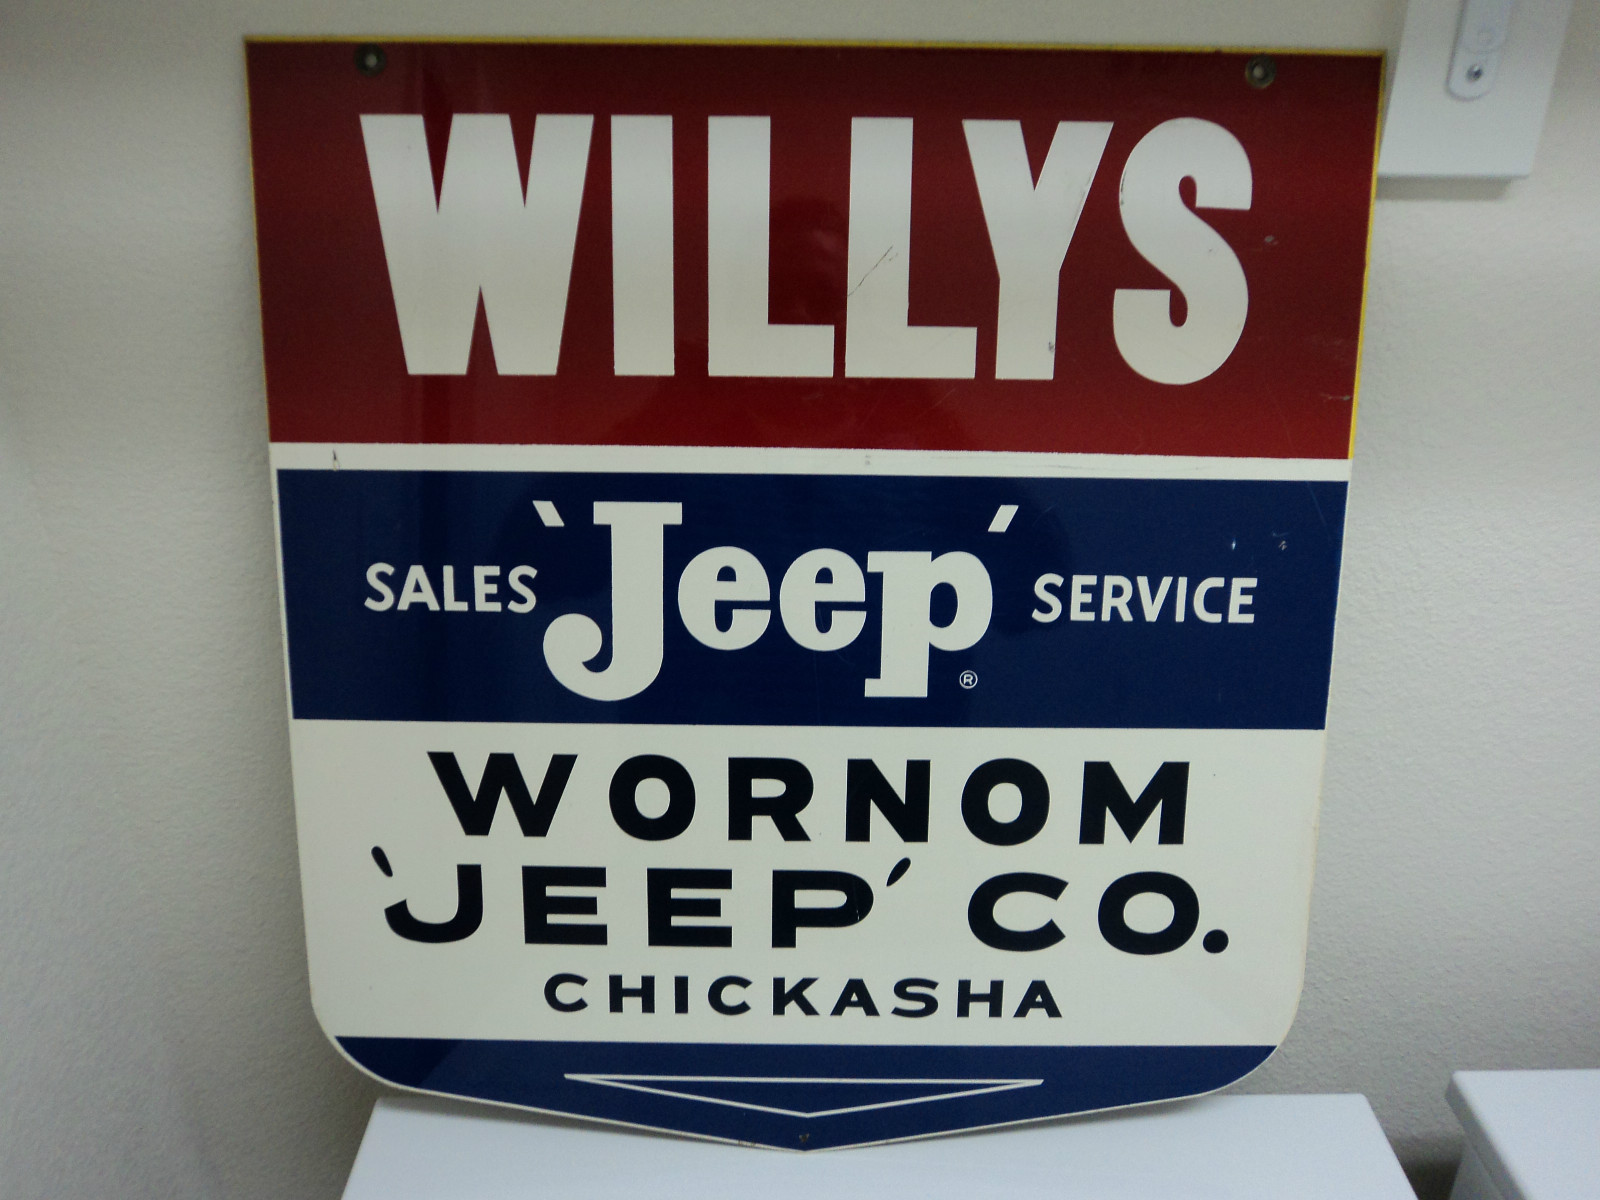 Willeys jeep sales #4